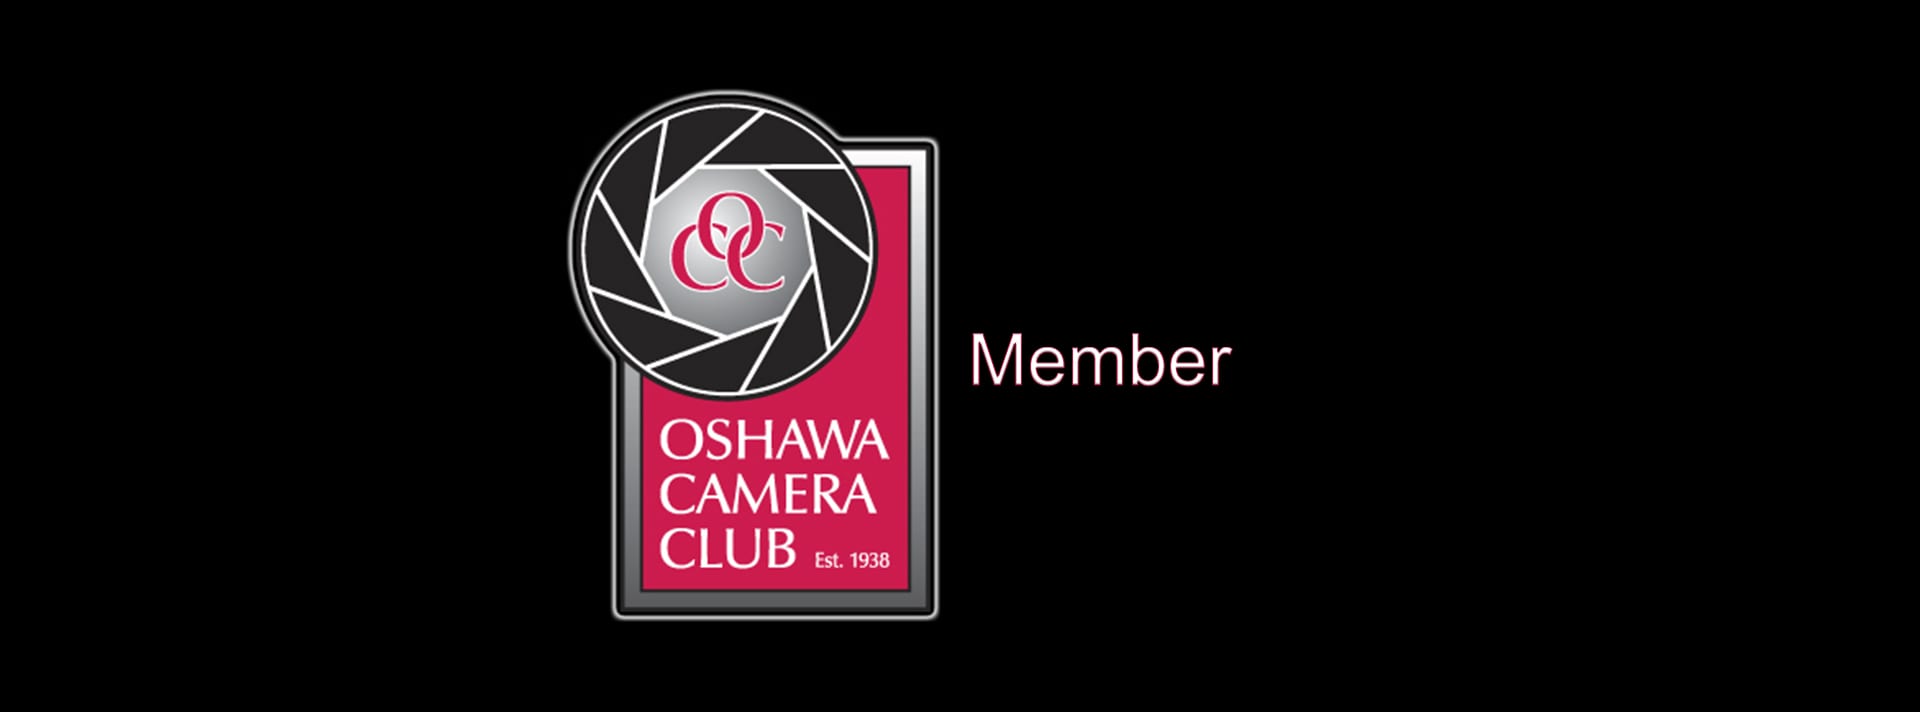 Oshawa Camera Club